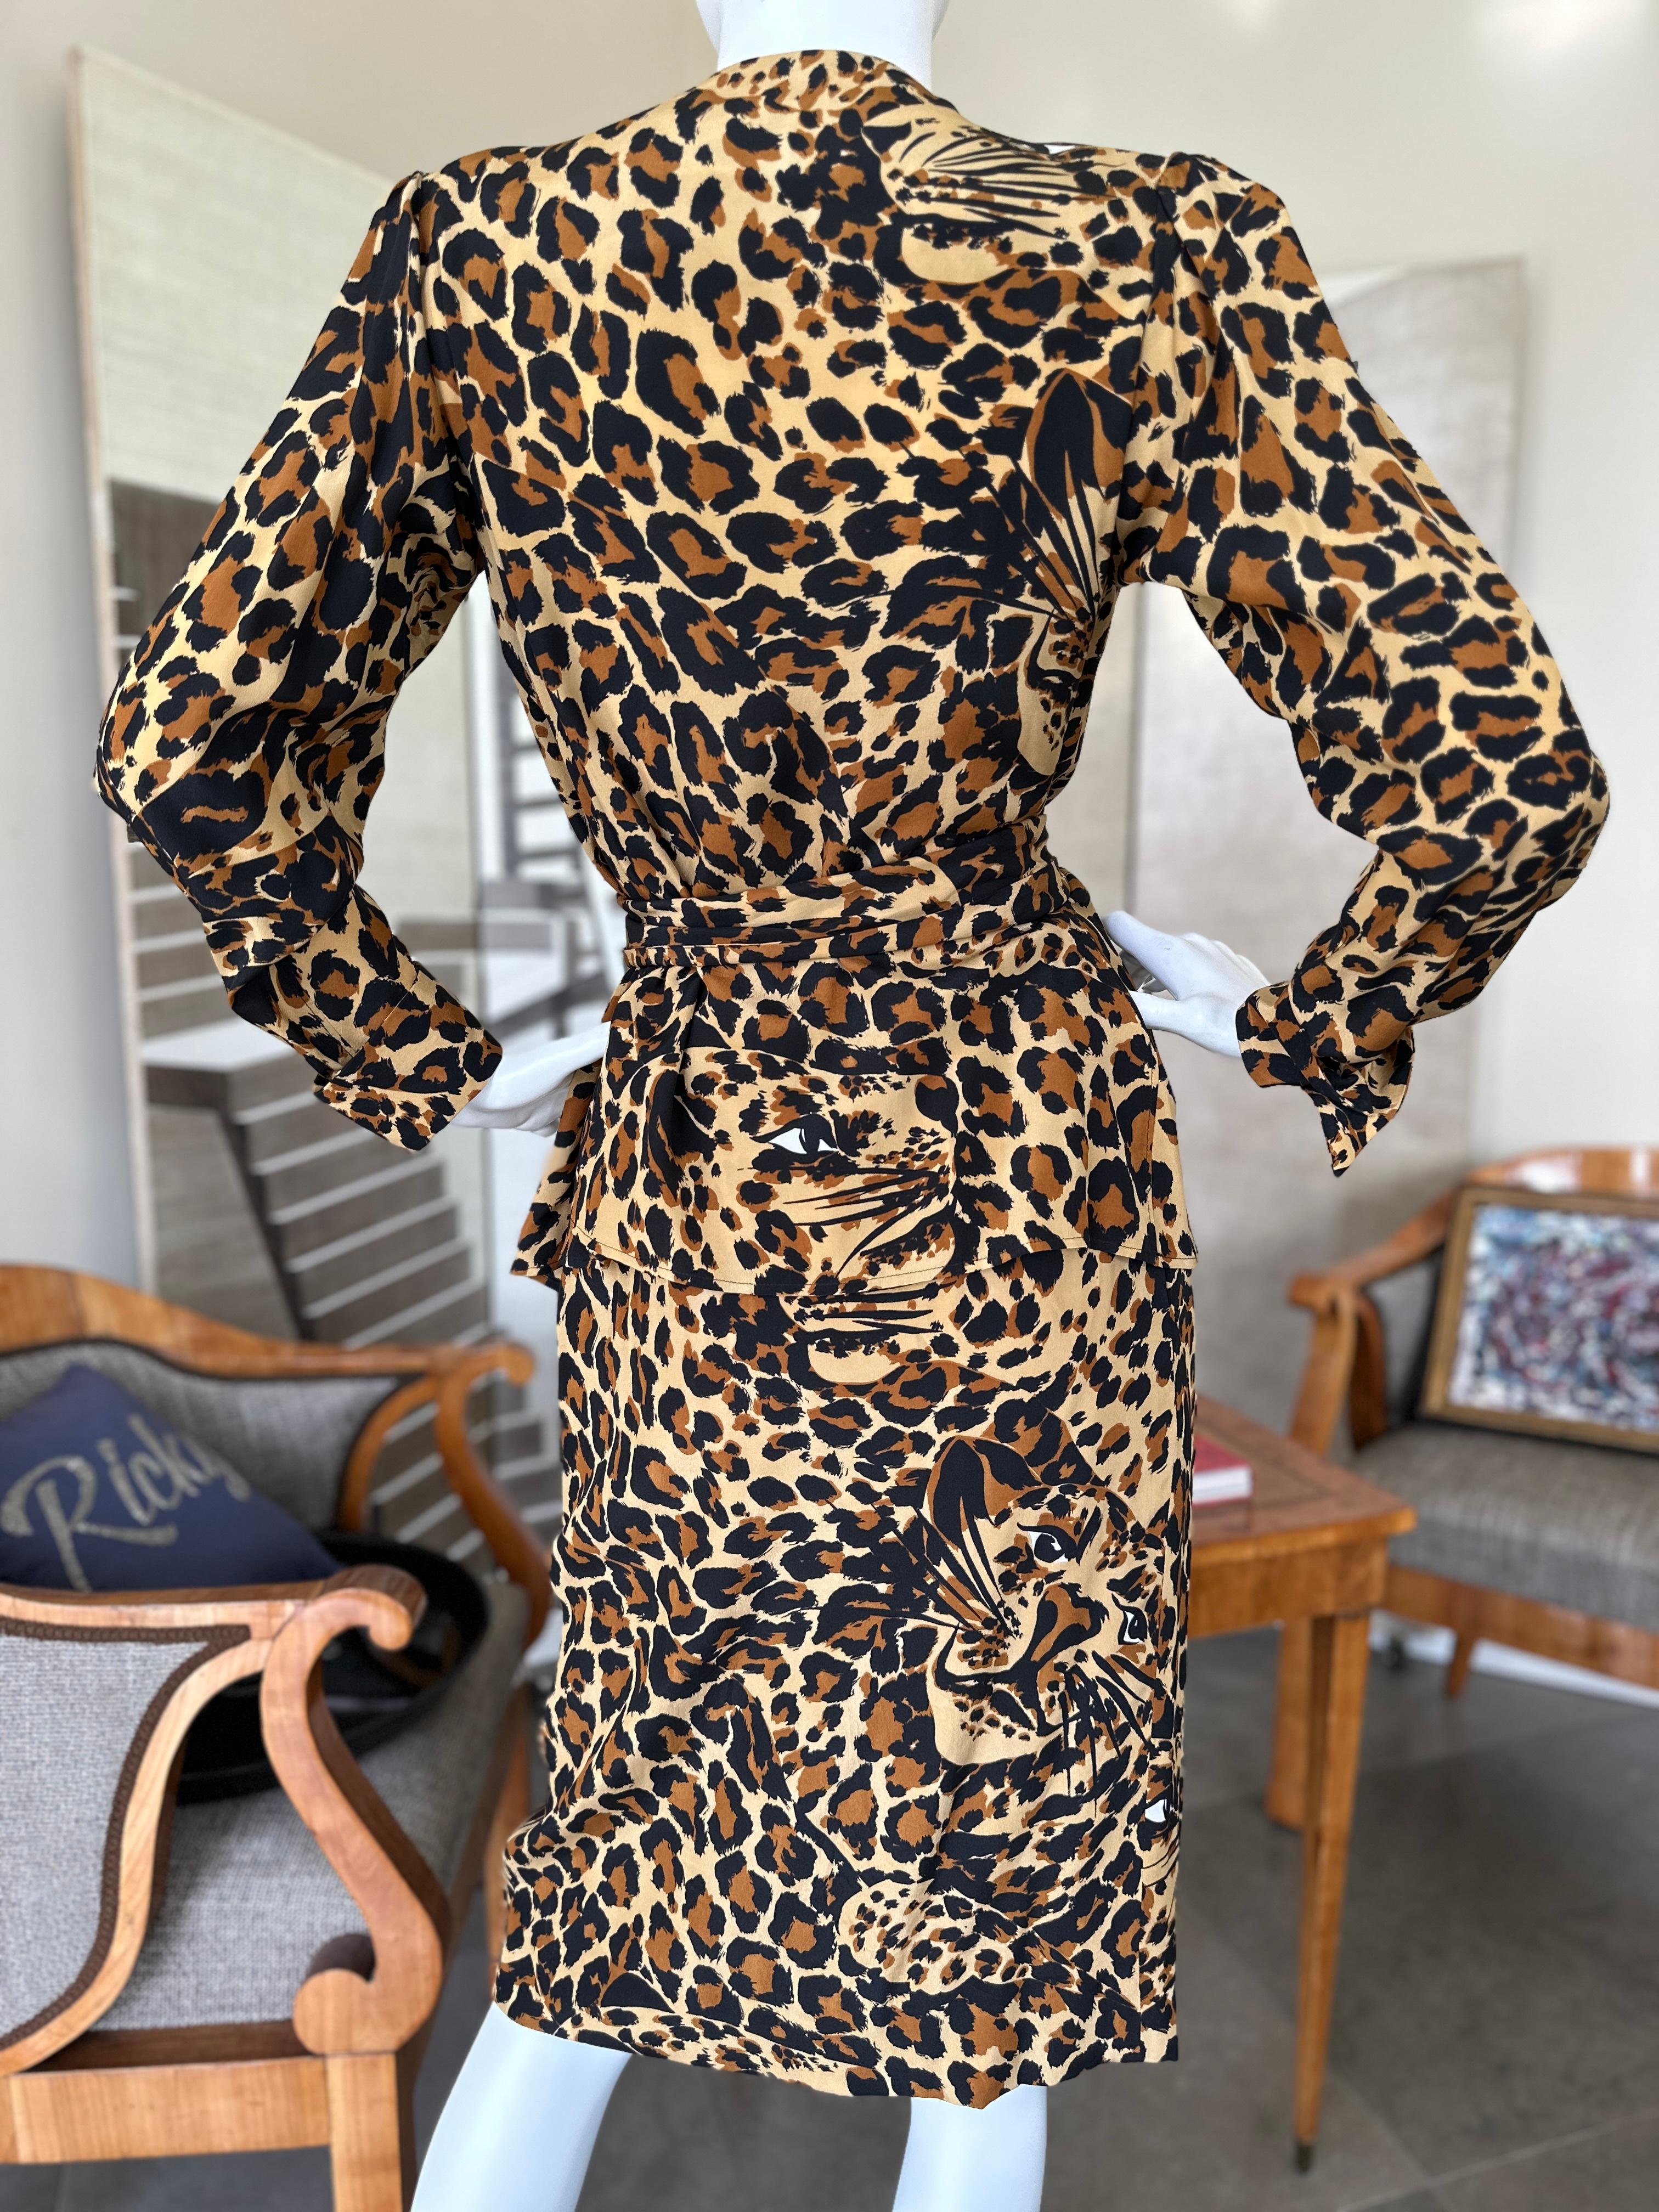 YSL Rive Gauche Fall 1986 Silk Leopard Print 3 Piece Cocktail Dress For Sale 2